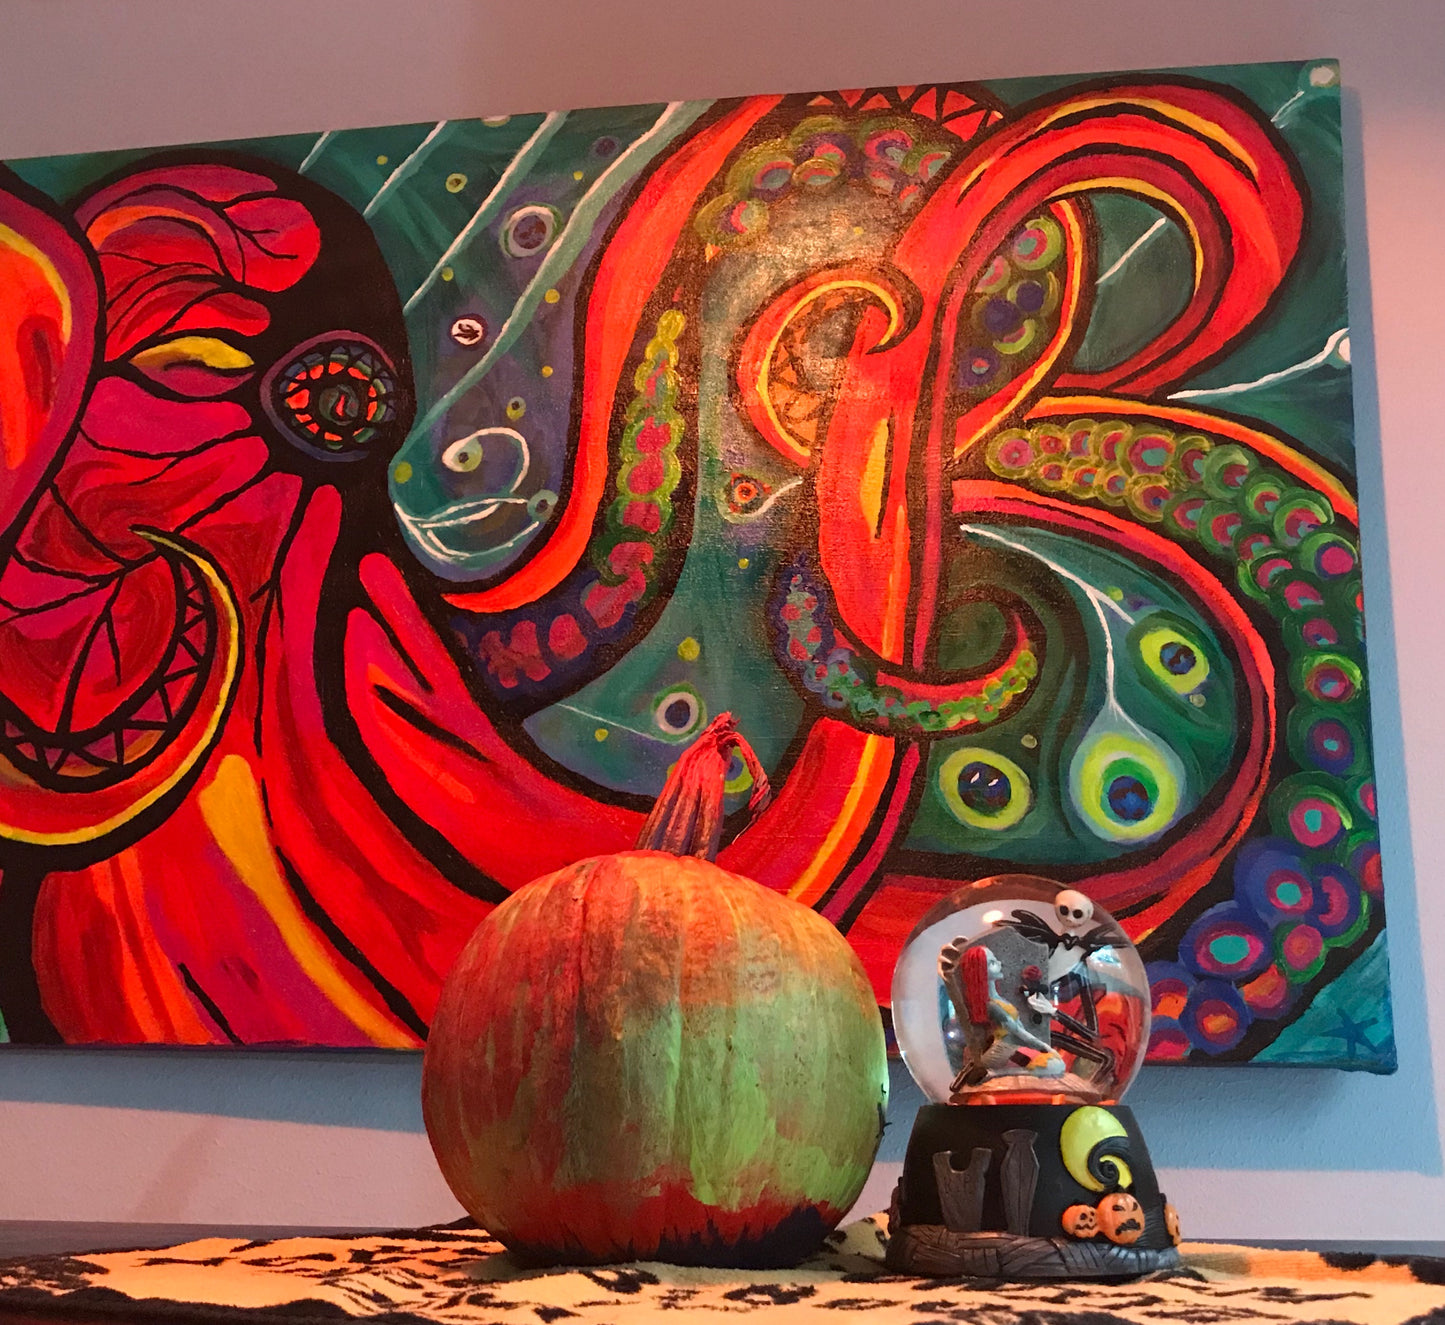 Wed, Oct 27, 4-6pm “Paint your Pumpkin” Public Houston Kids Painting Class